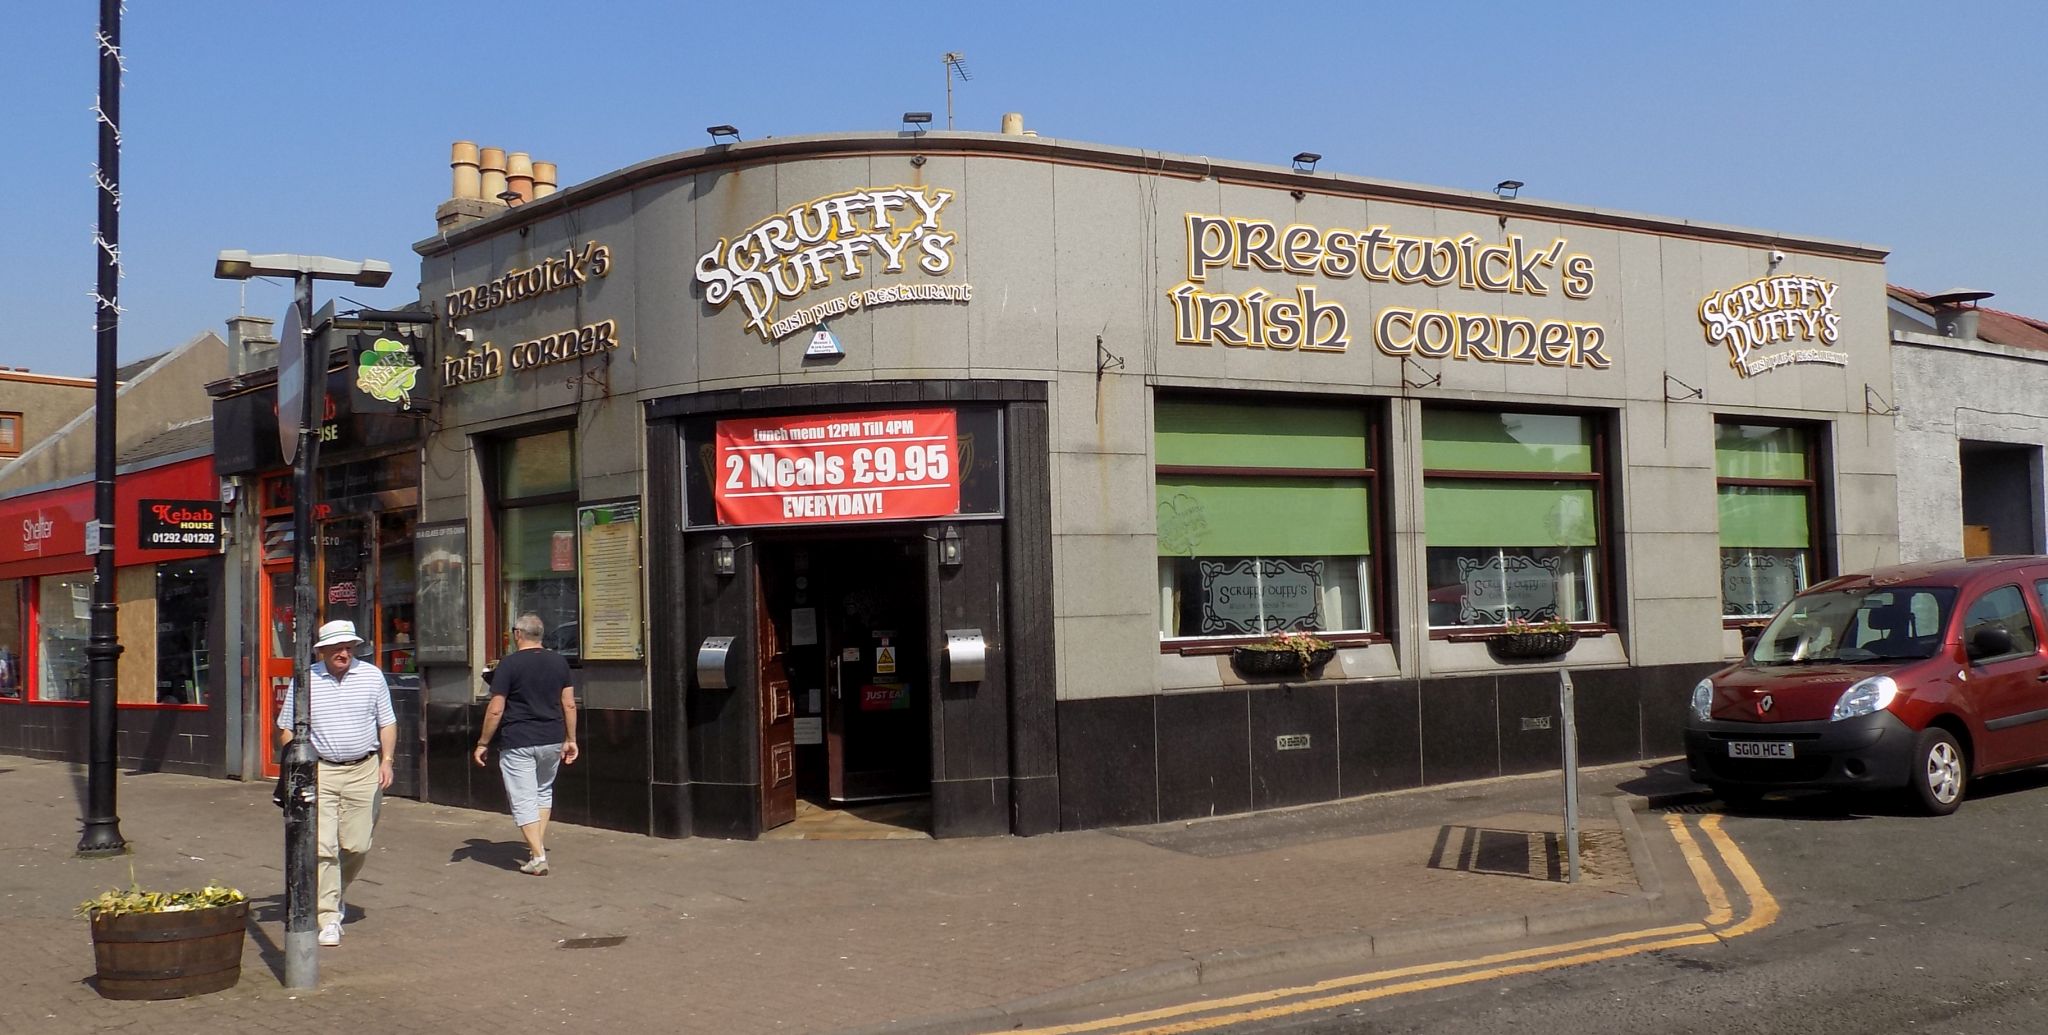 "Scruffy Duffy's" Restaurant in Prestwick